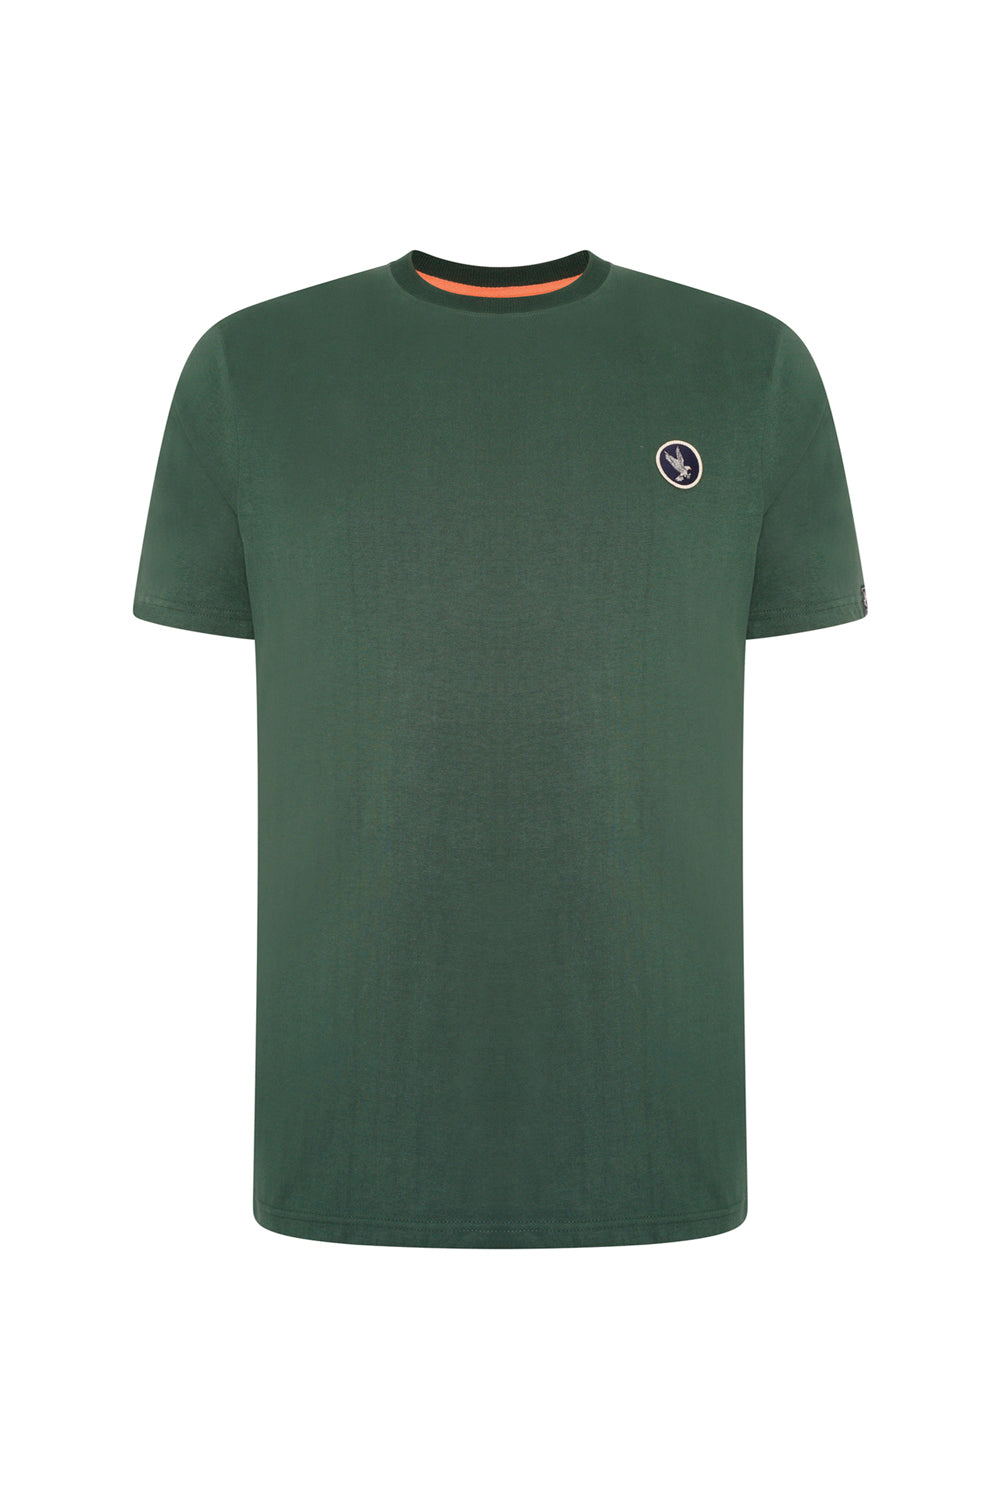 Extra-Tall Grey Hawk Essential Logo T-Shirt in Green RRP £29.99